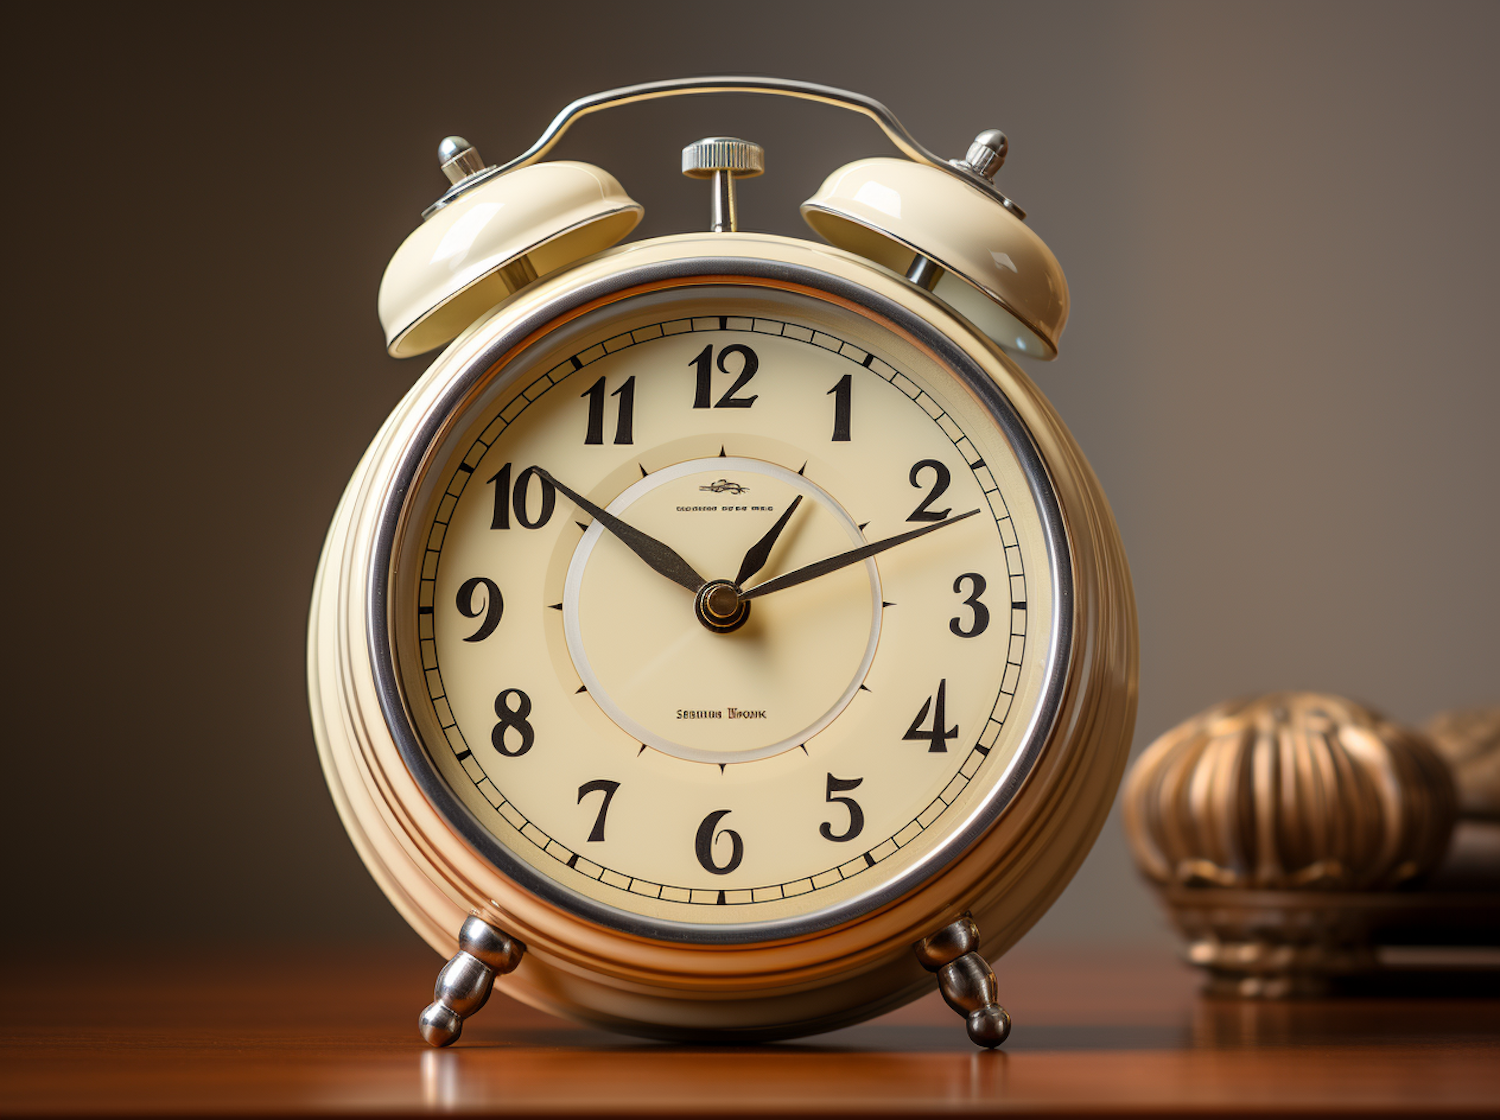 Vintage Golden Analog Alarm Clock on a Wooden Surface